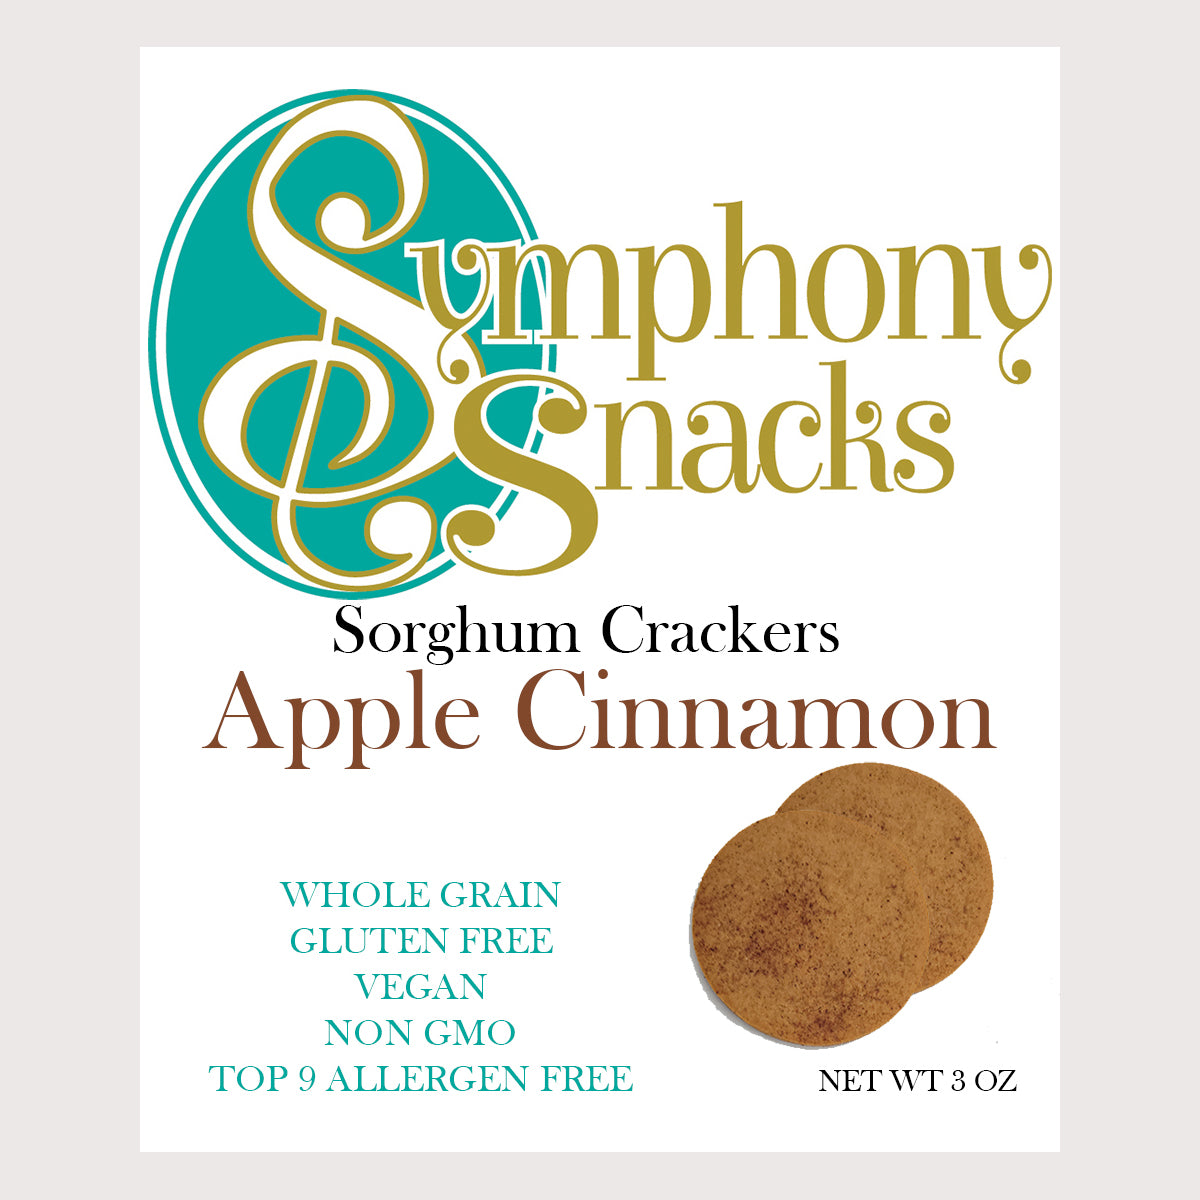 Apple Cinnamon Sorghum Crackers